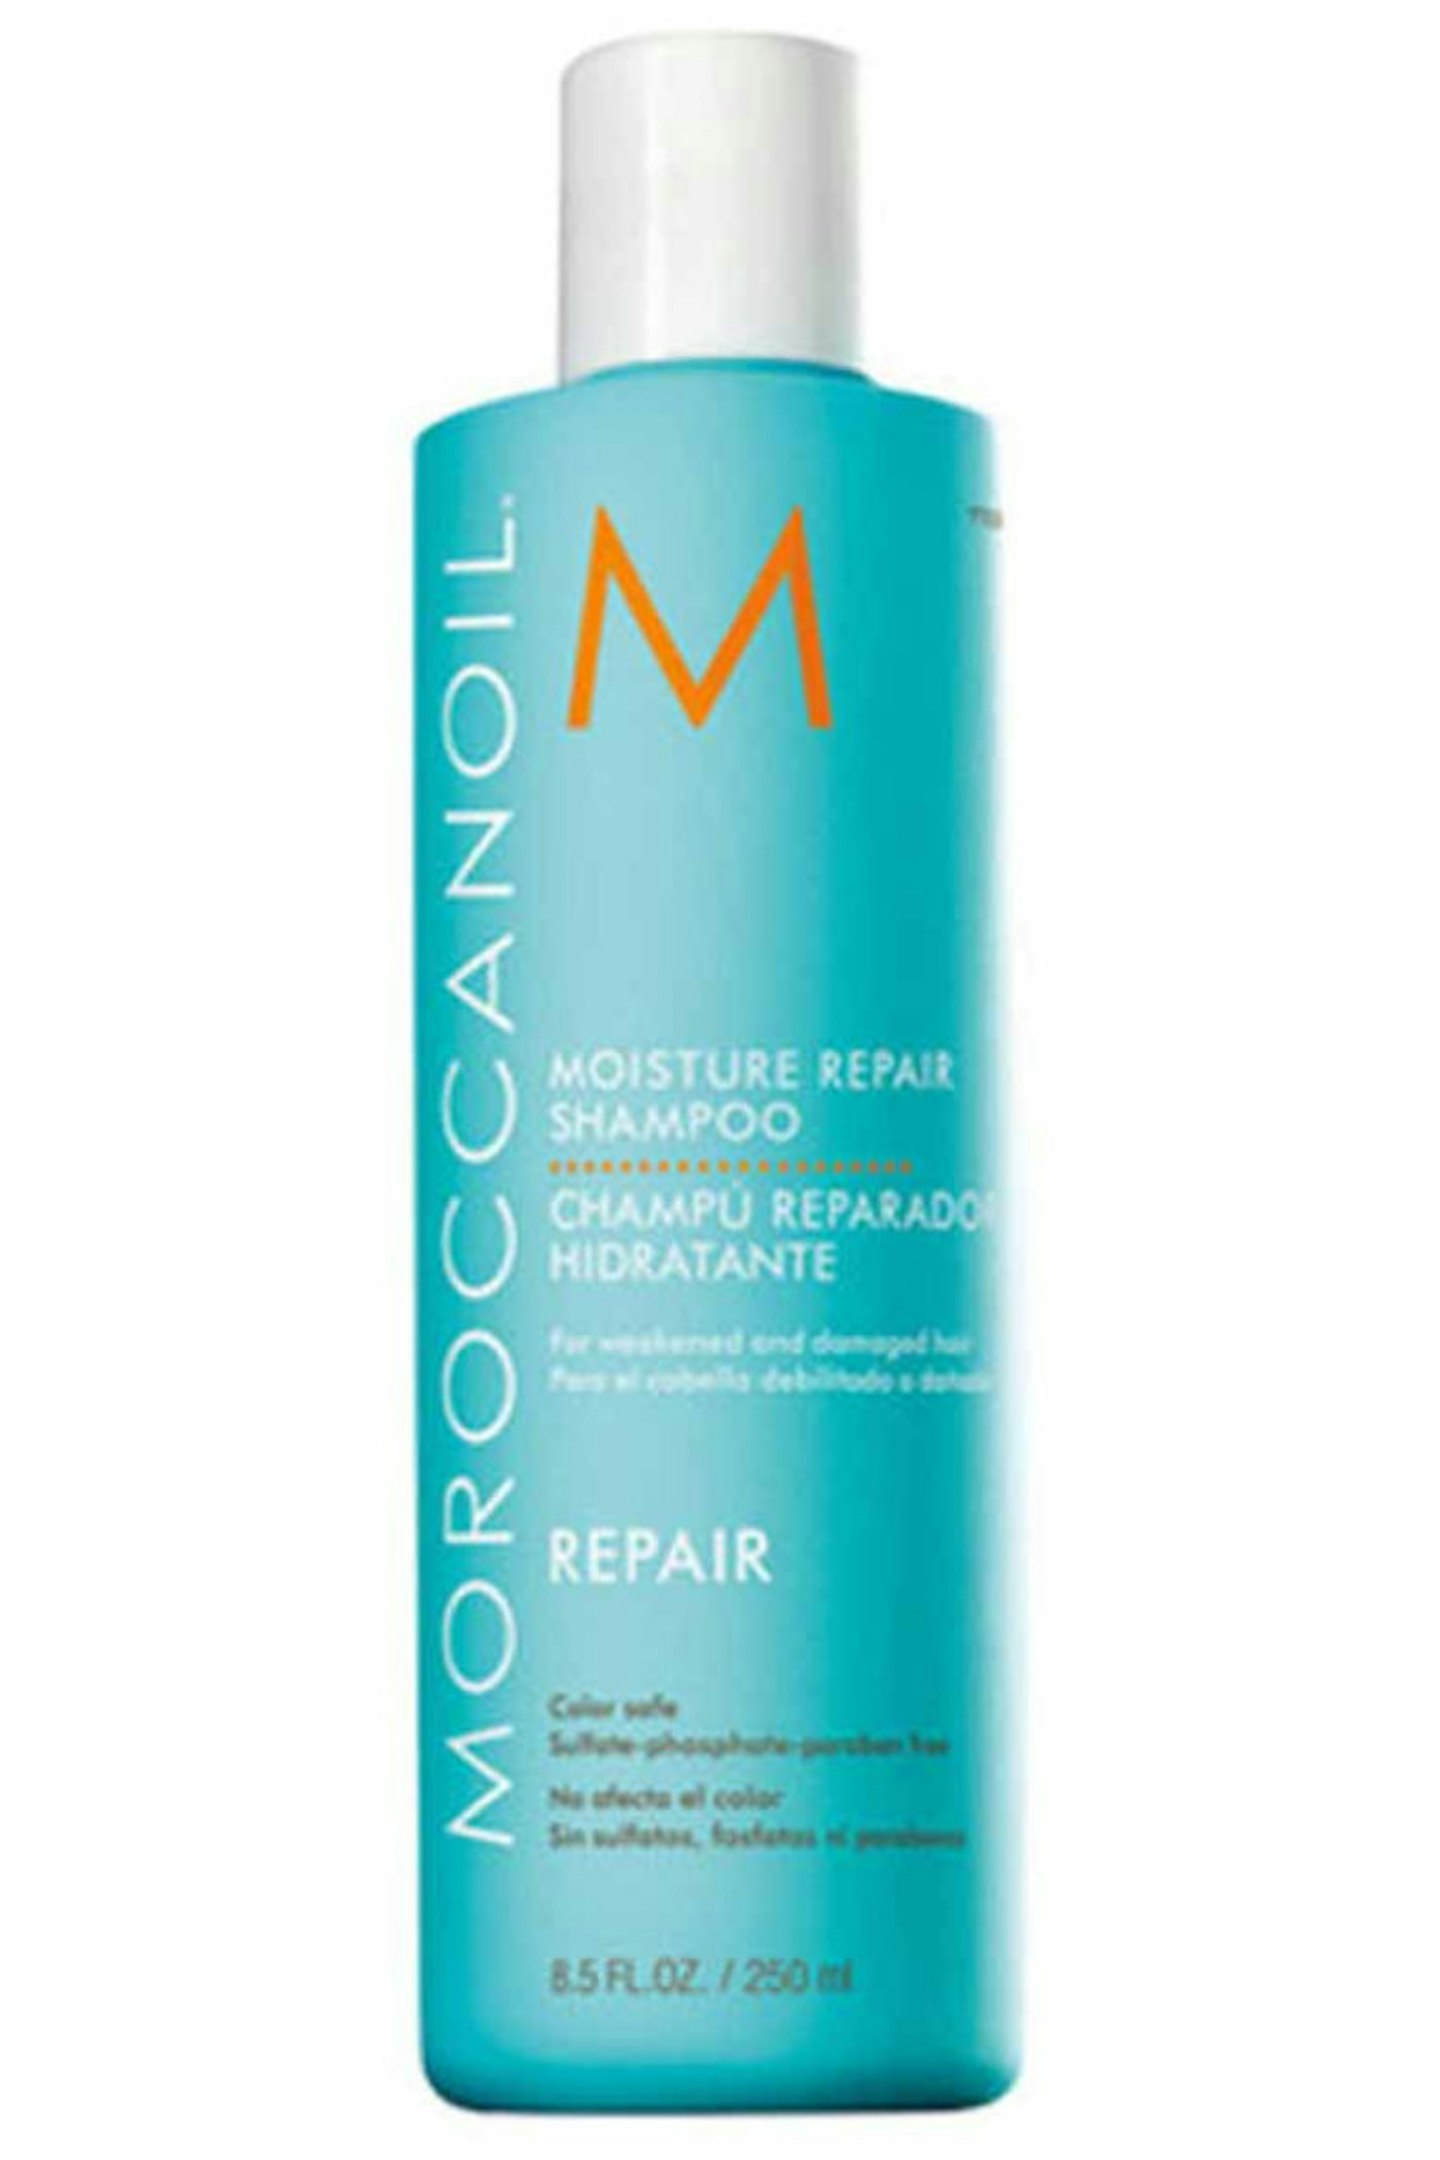 1. Moroccanoil Moisture Repair Shampoo, £16.55